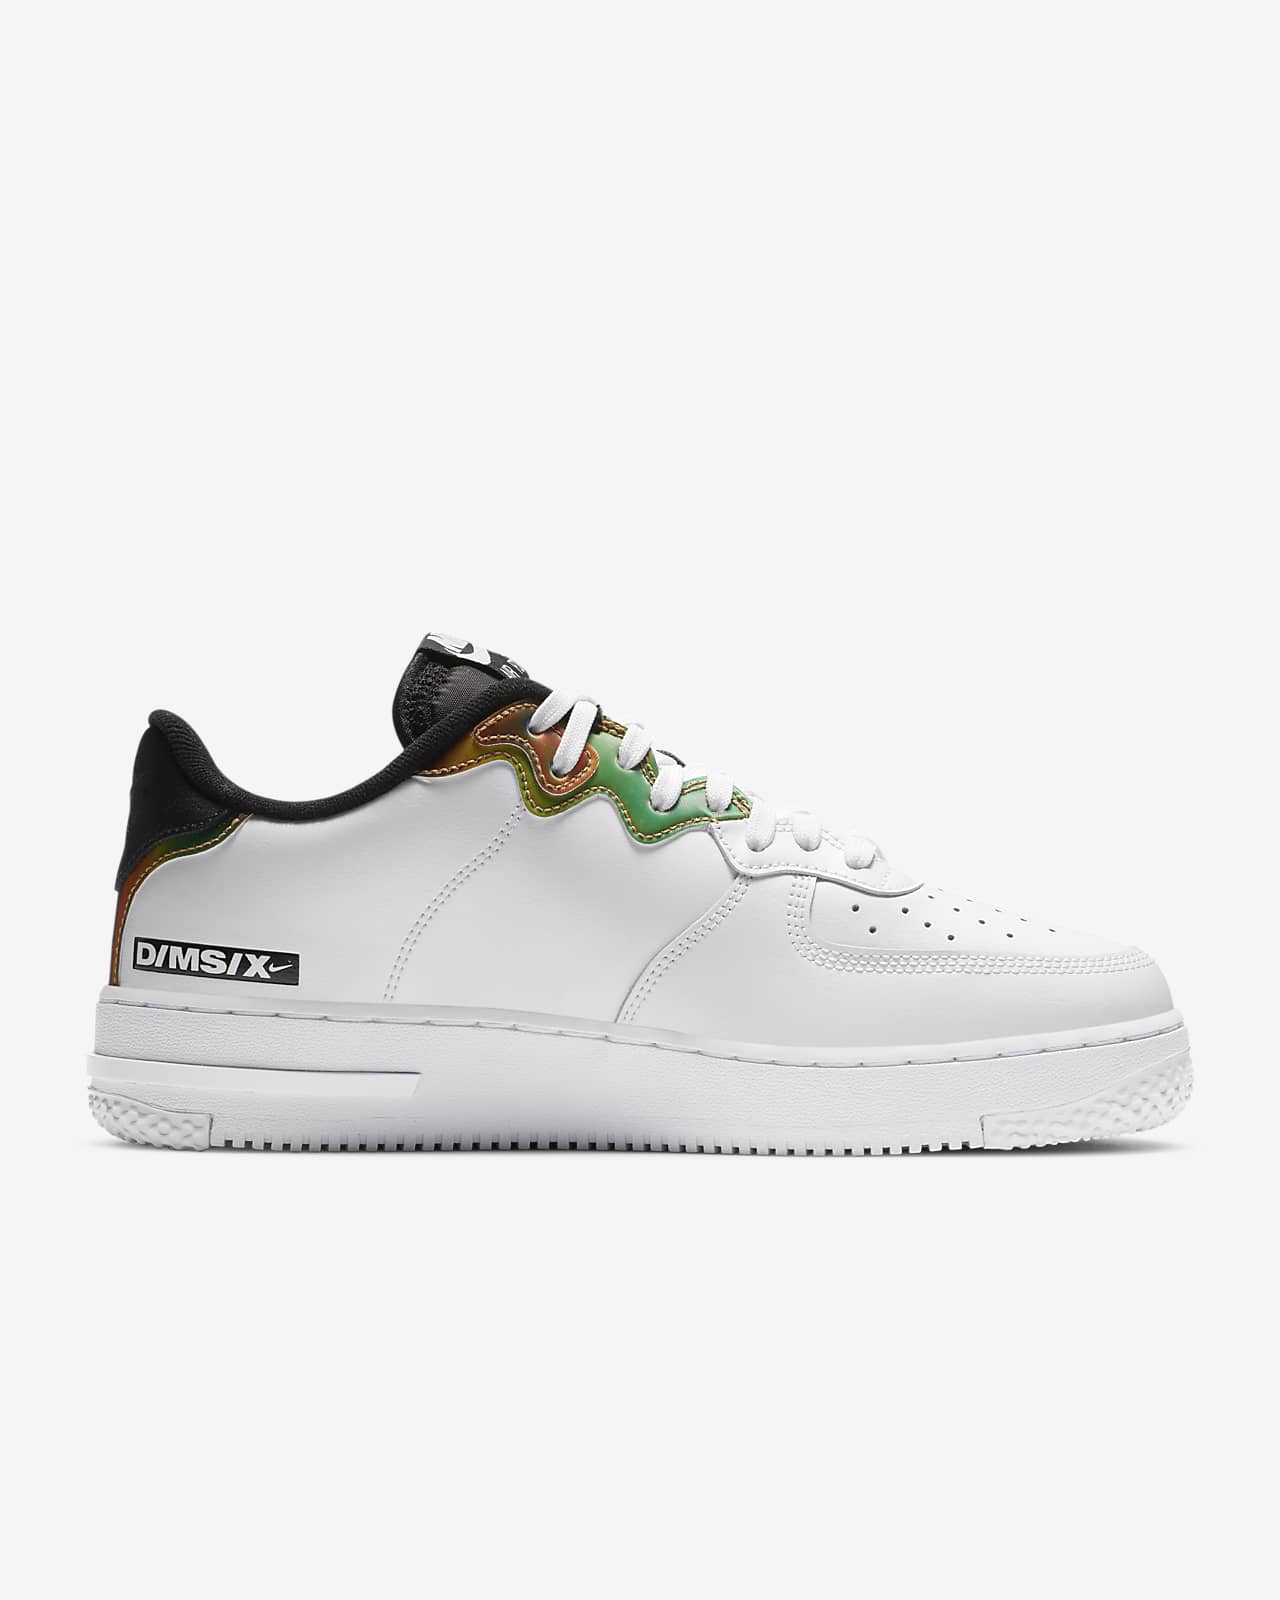 Nike Air Force 1 React LV8 Men's Shoe 